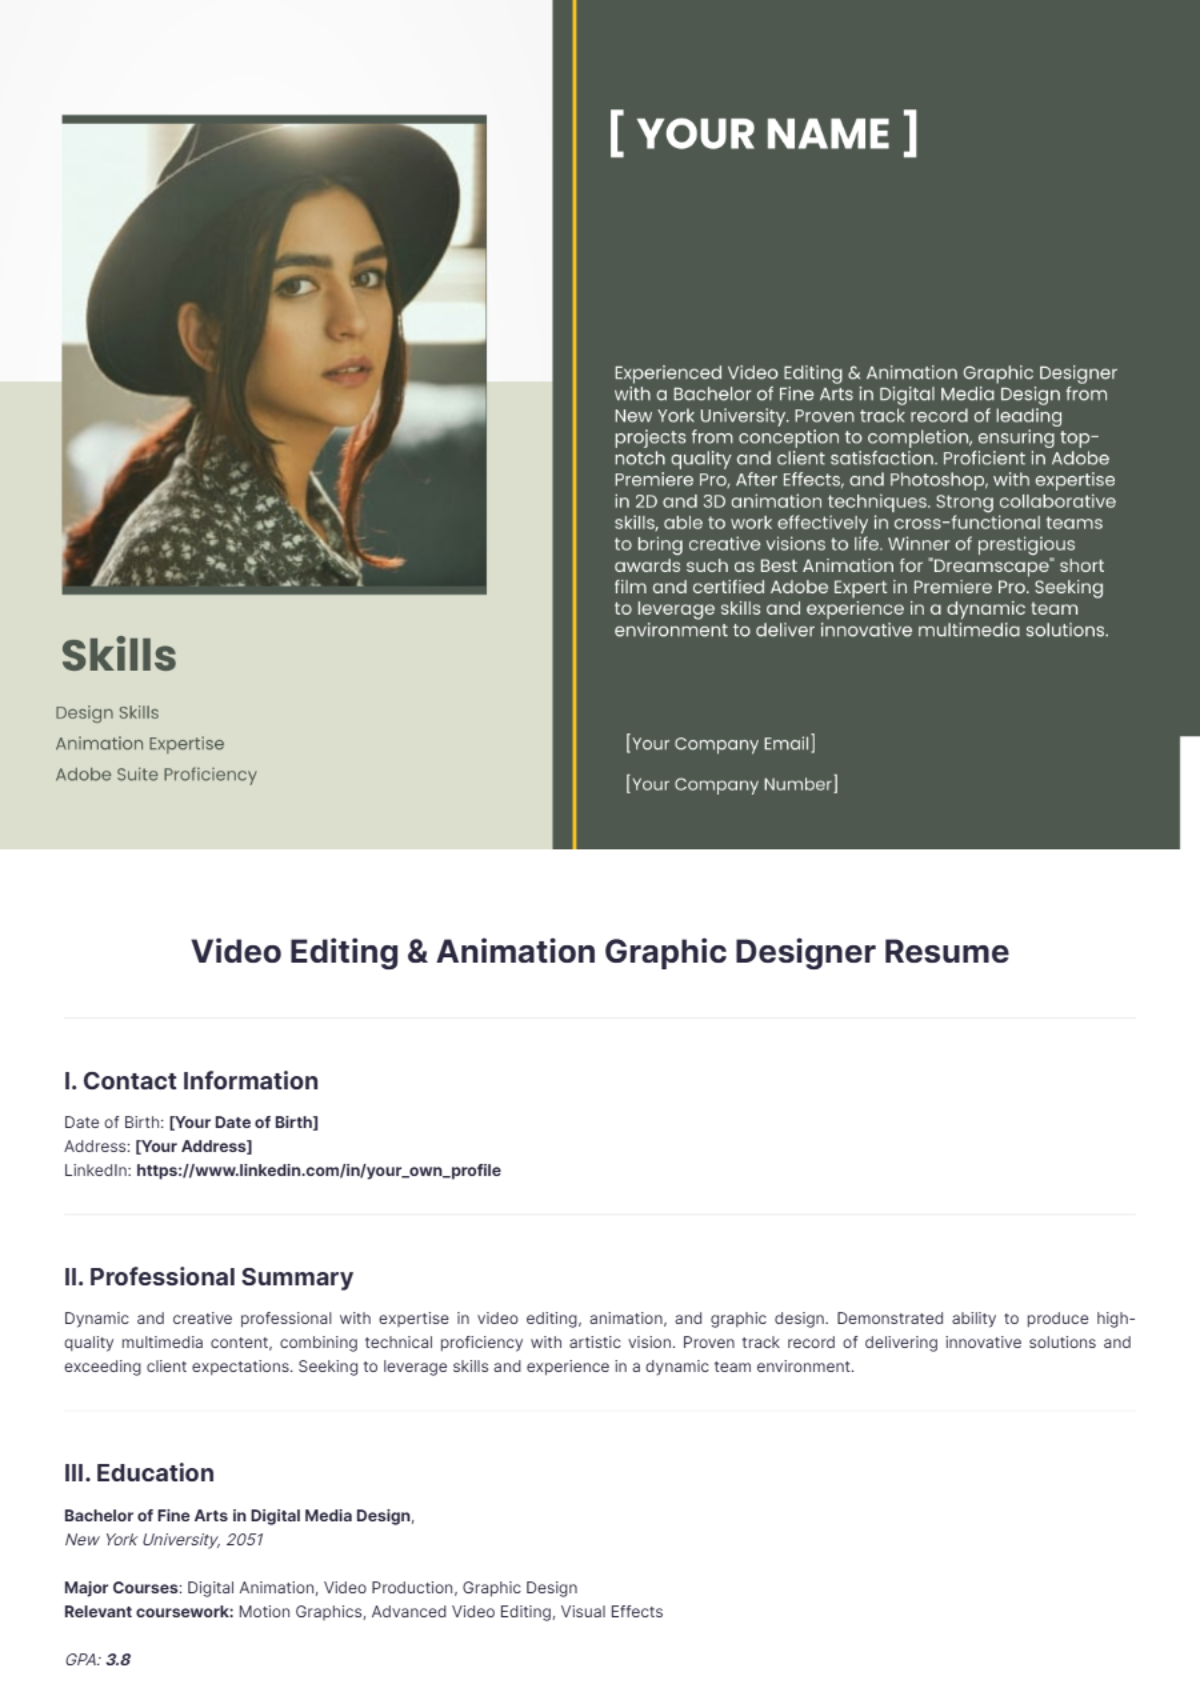 Free Video Editing & Animation Graphic Designer Resume